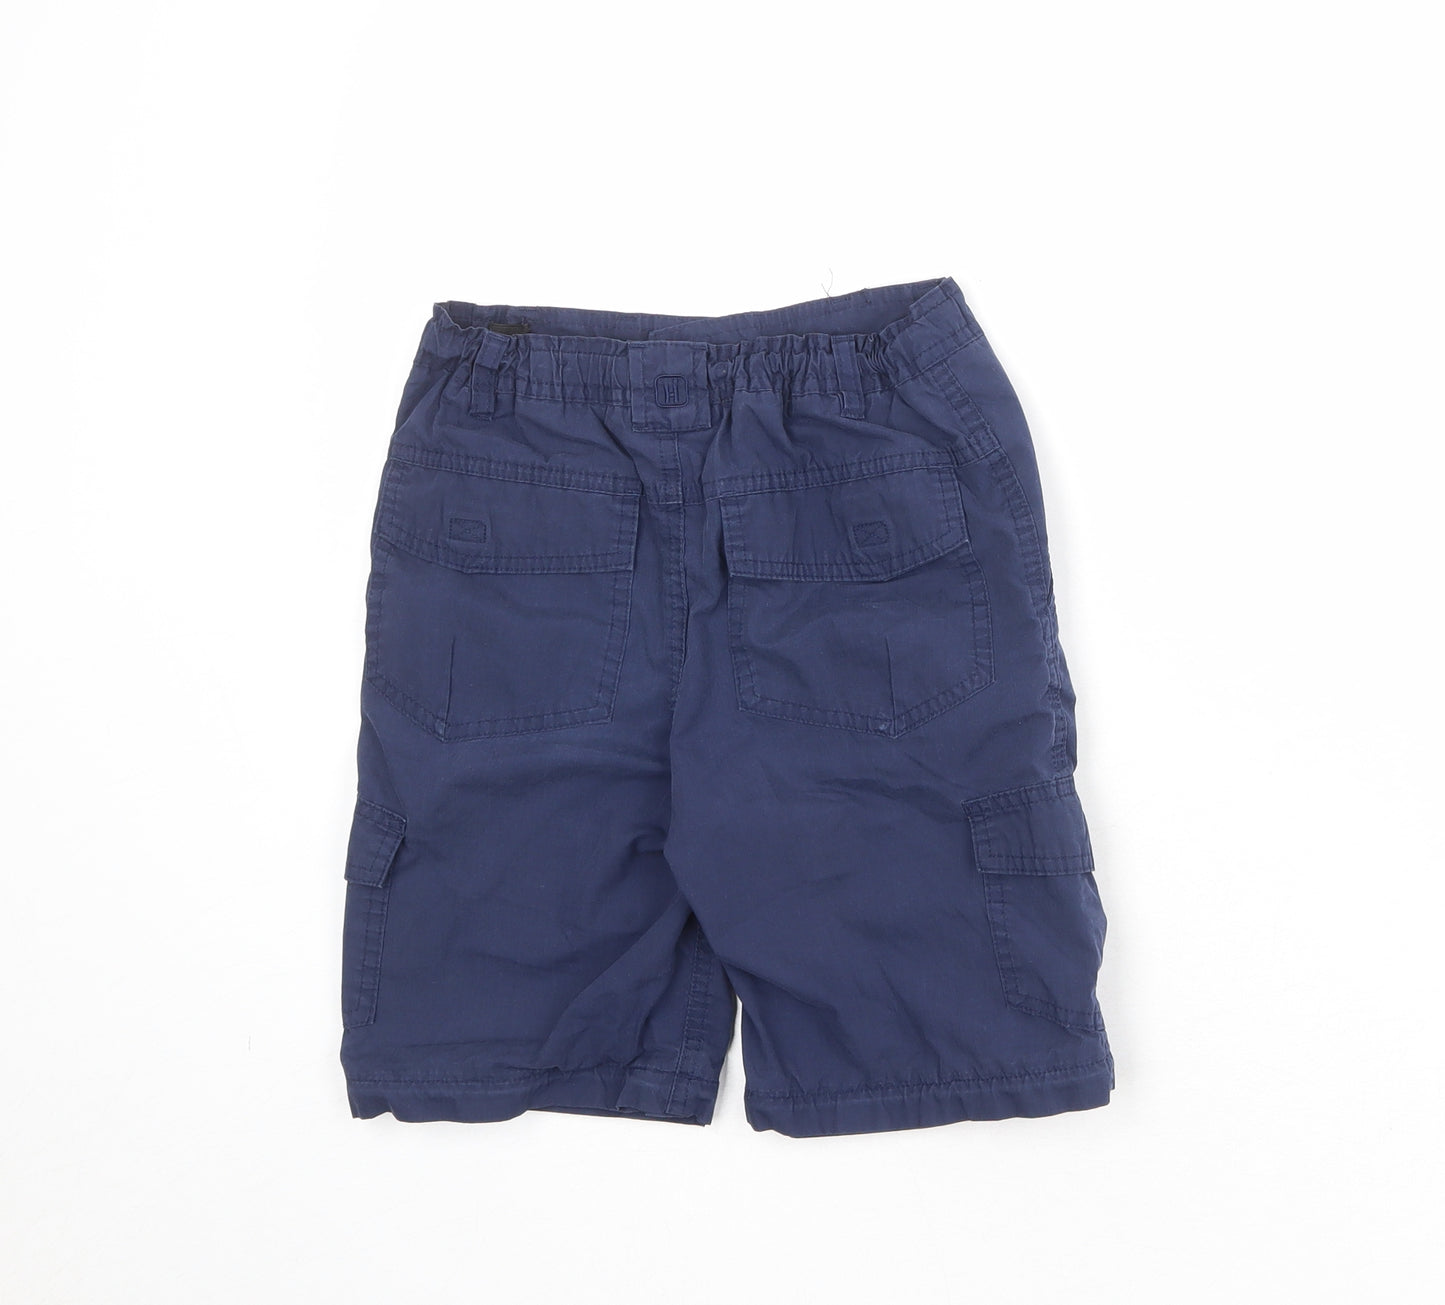 Hi Gear Boys Blue Polyester Cargo Shorts Size 9-10 Years Regular Zip